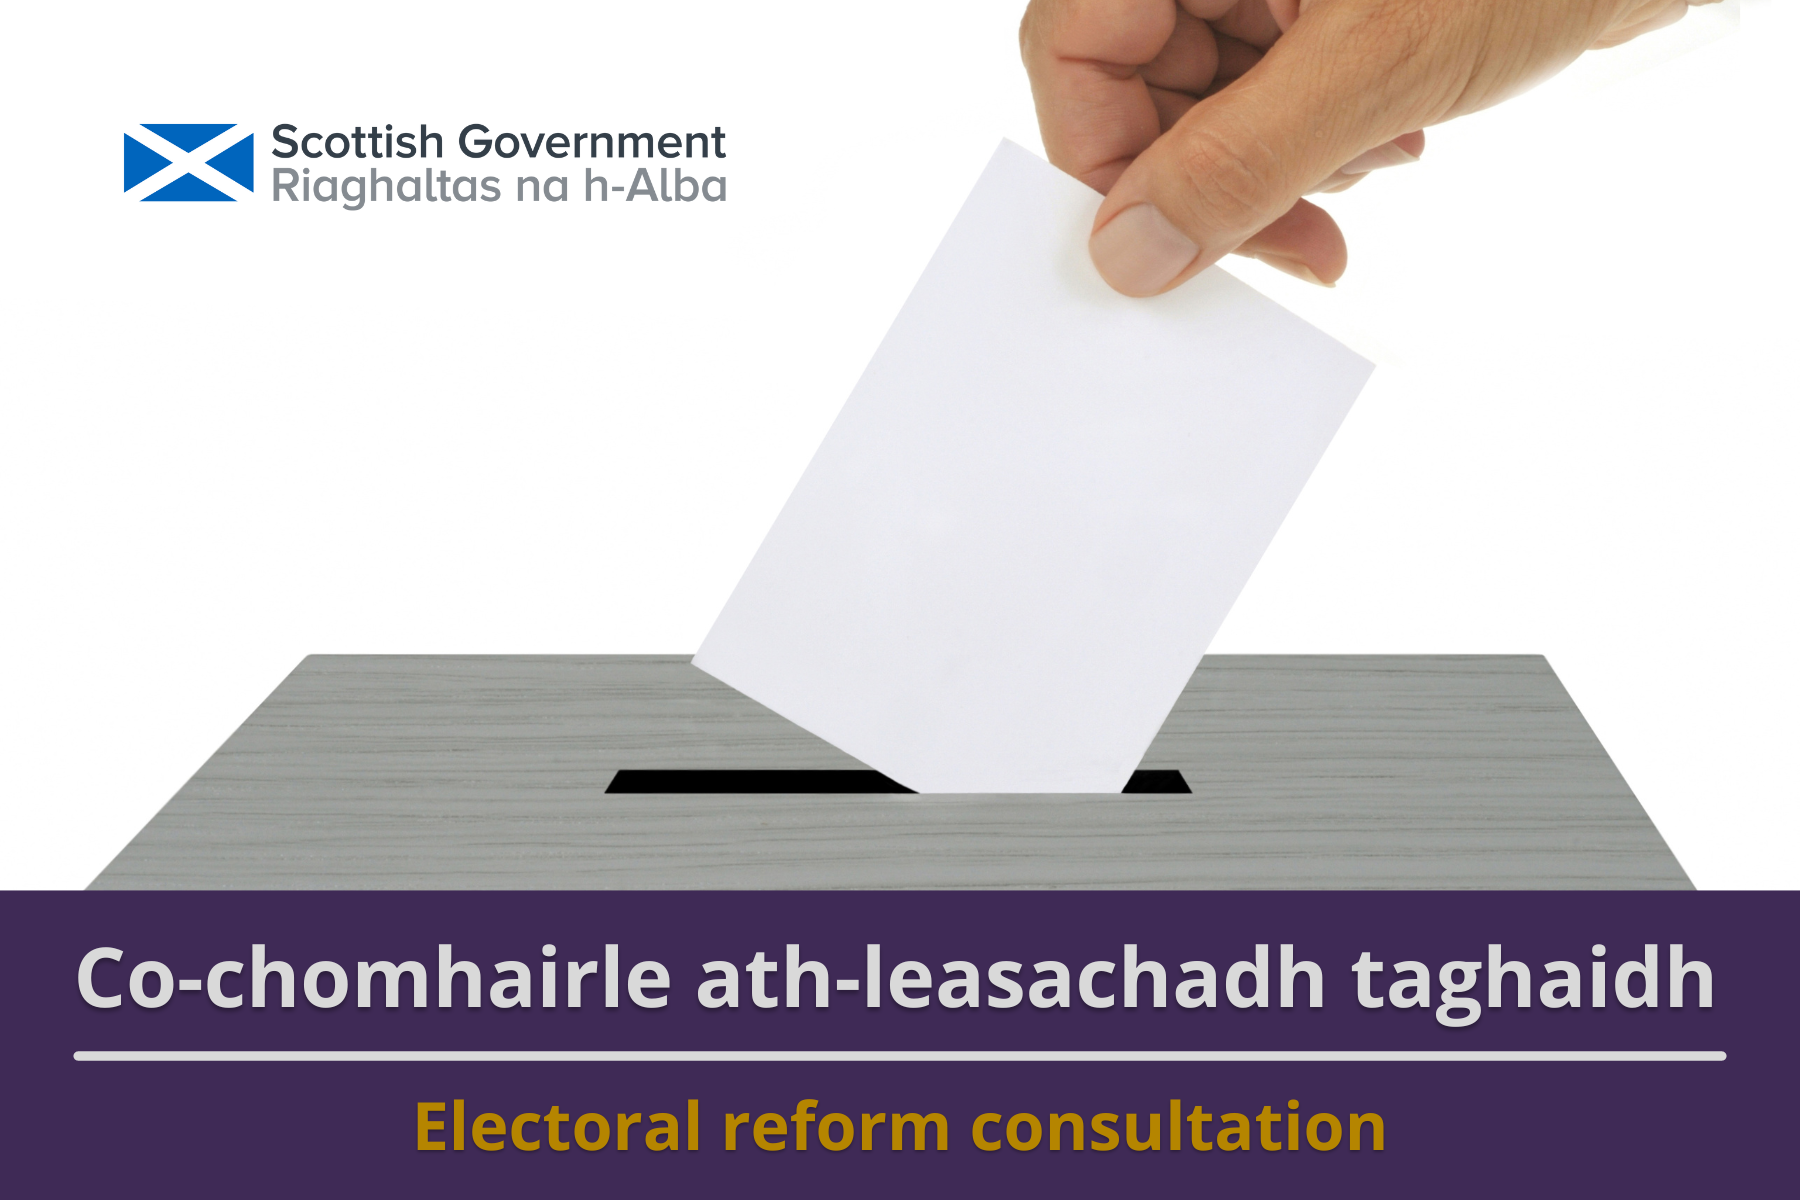 Scottish Government Electoral Reform Consultation